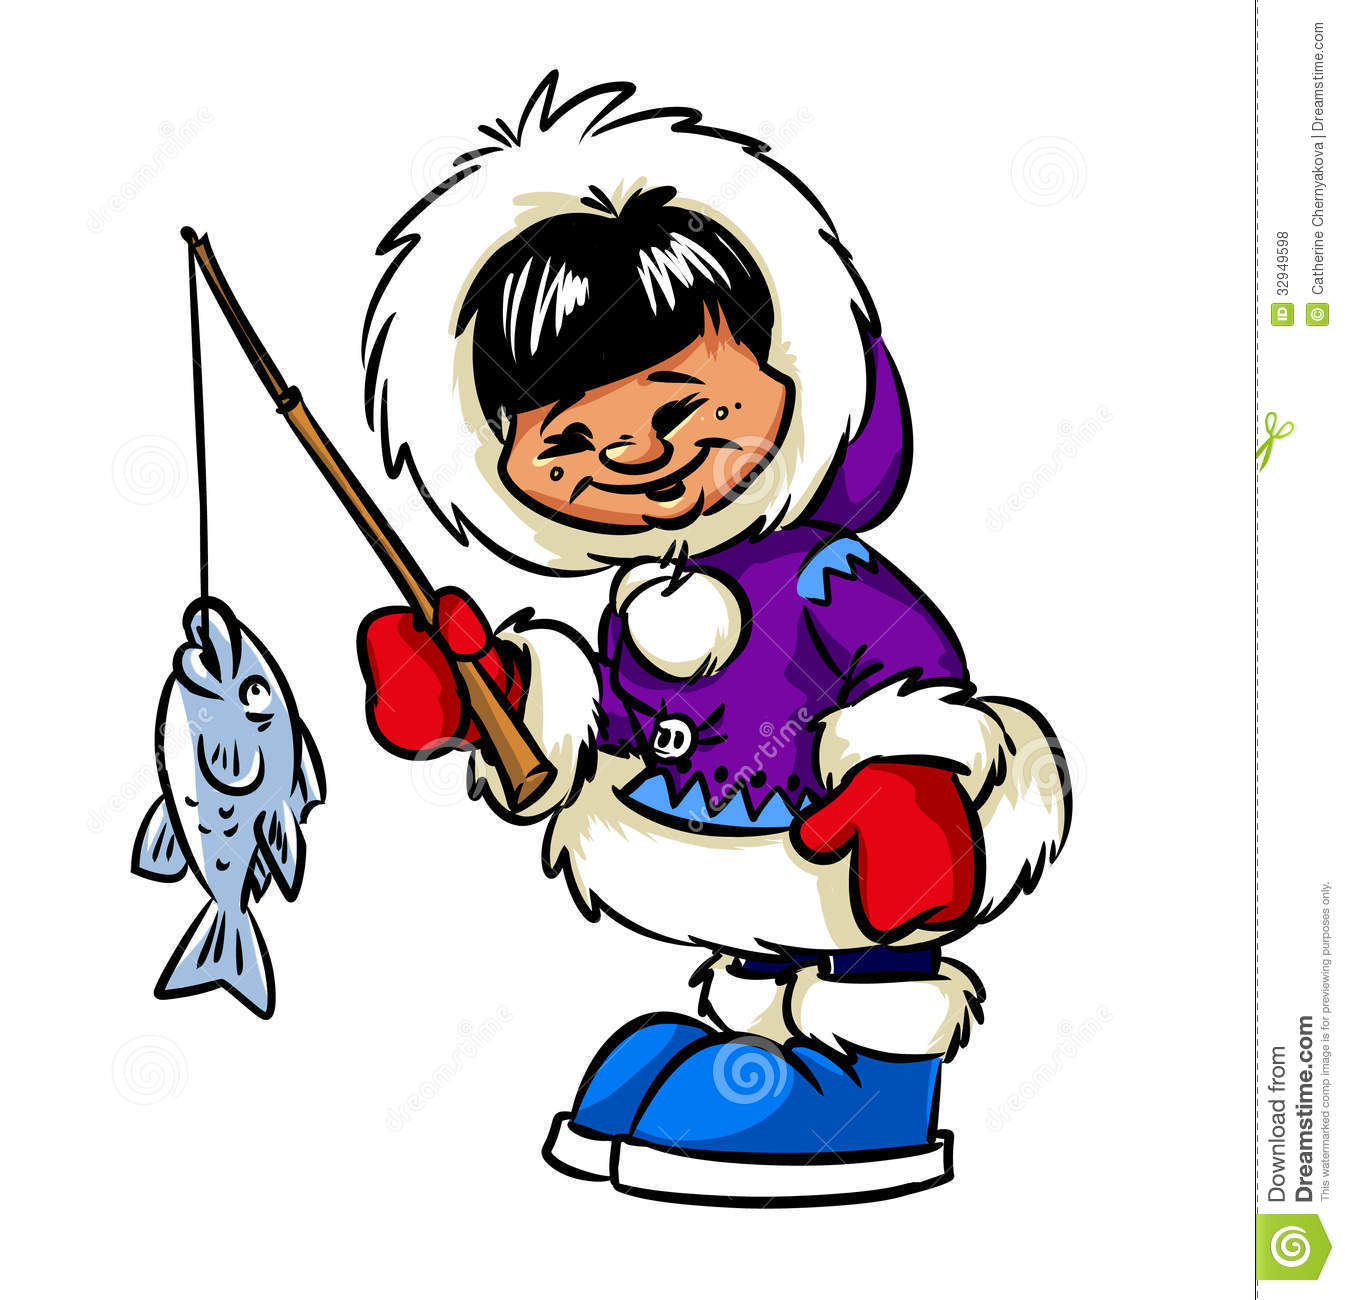 Happy Eskimo Boy And Fish Royalty Free Stock Photos Image 32949598